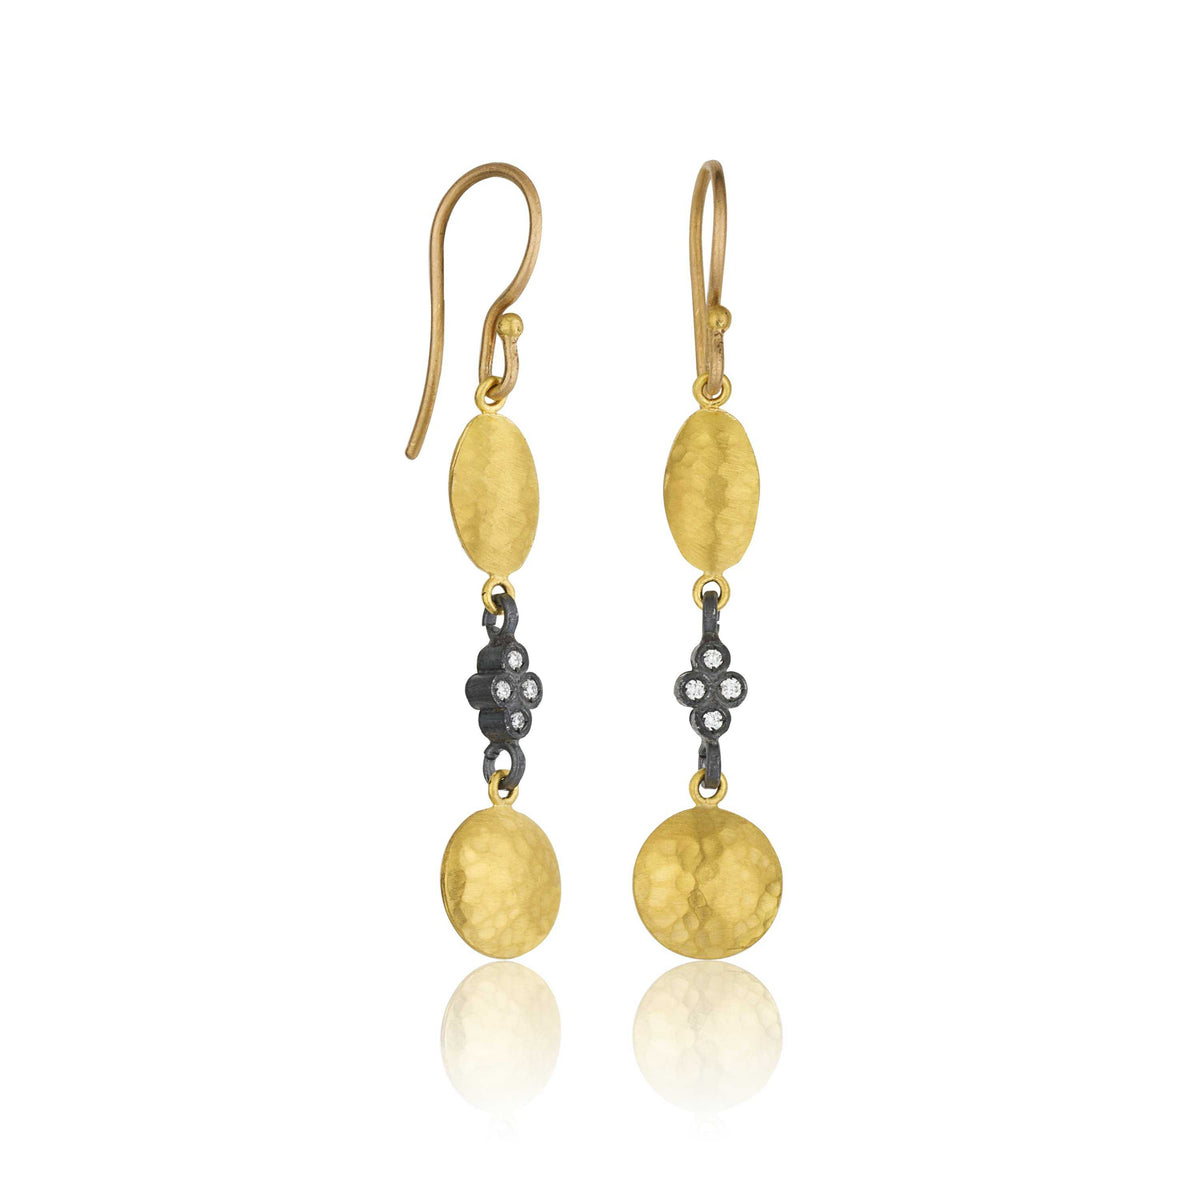 Lika Behar Kadiz Drop Earrings 24 karat Gold and Diamond set in Sterli